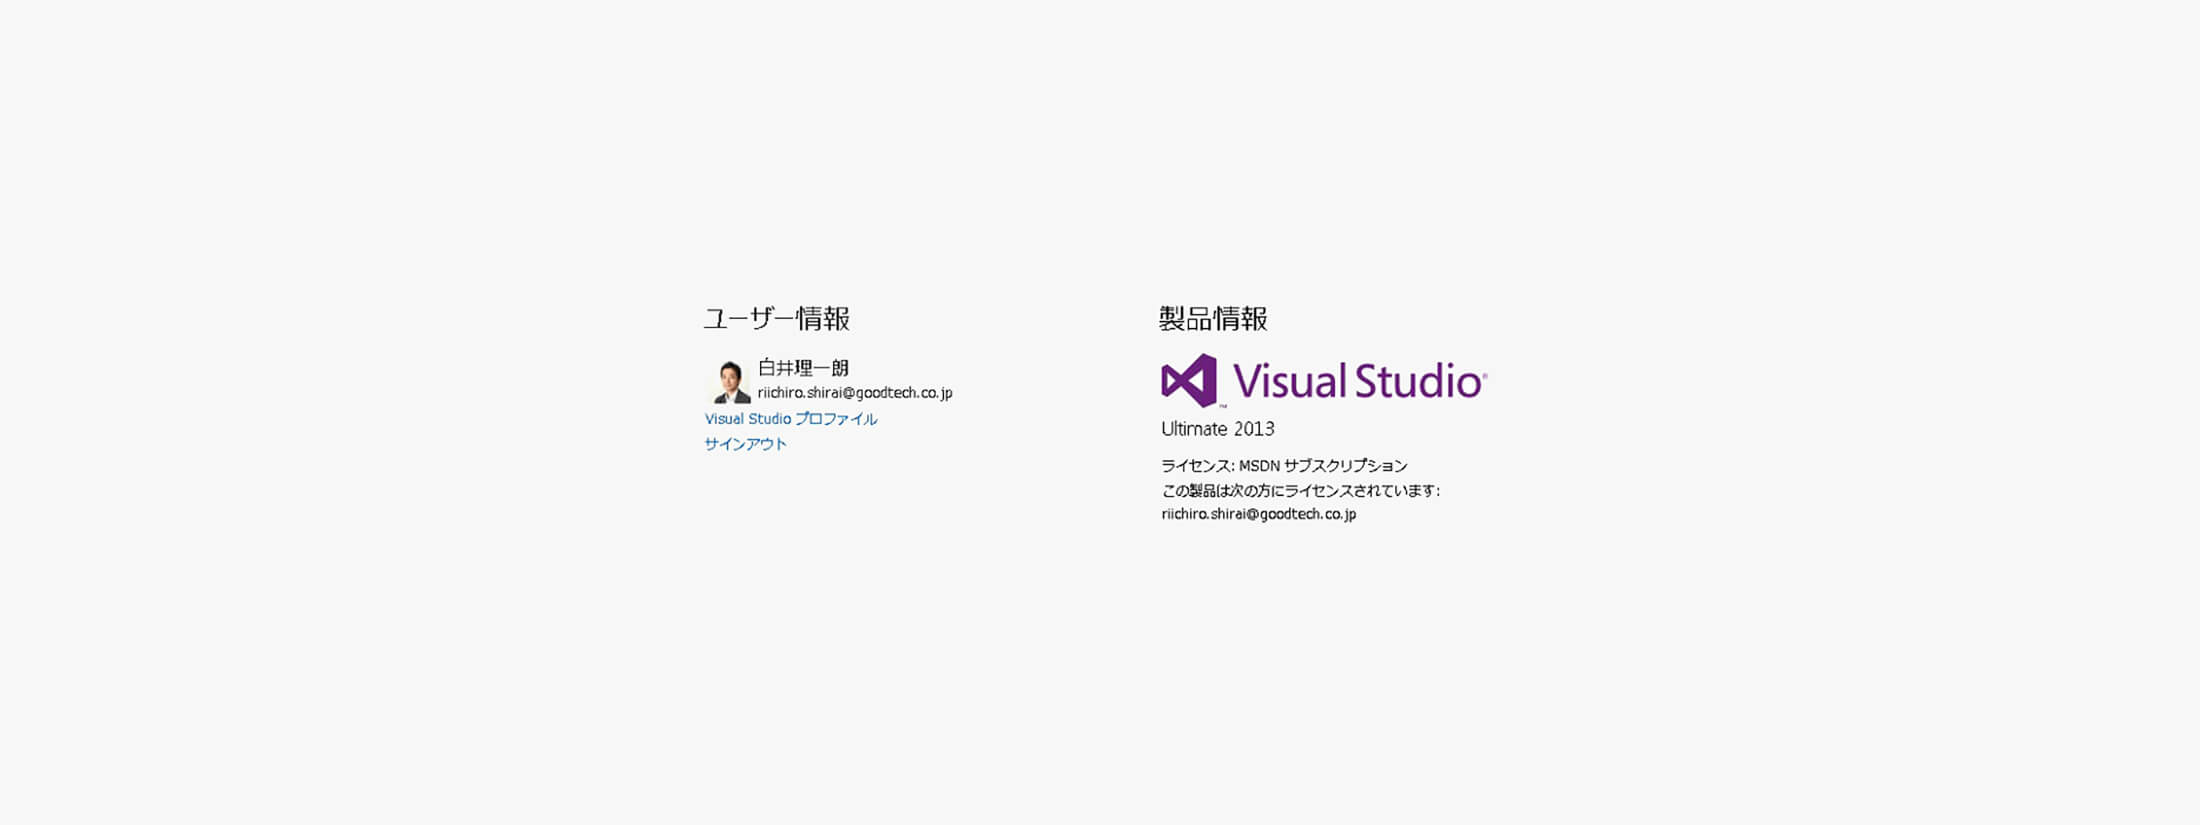 VisualStudio2013ロゴ